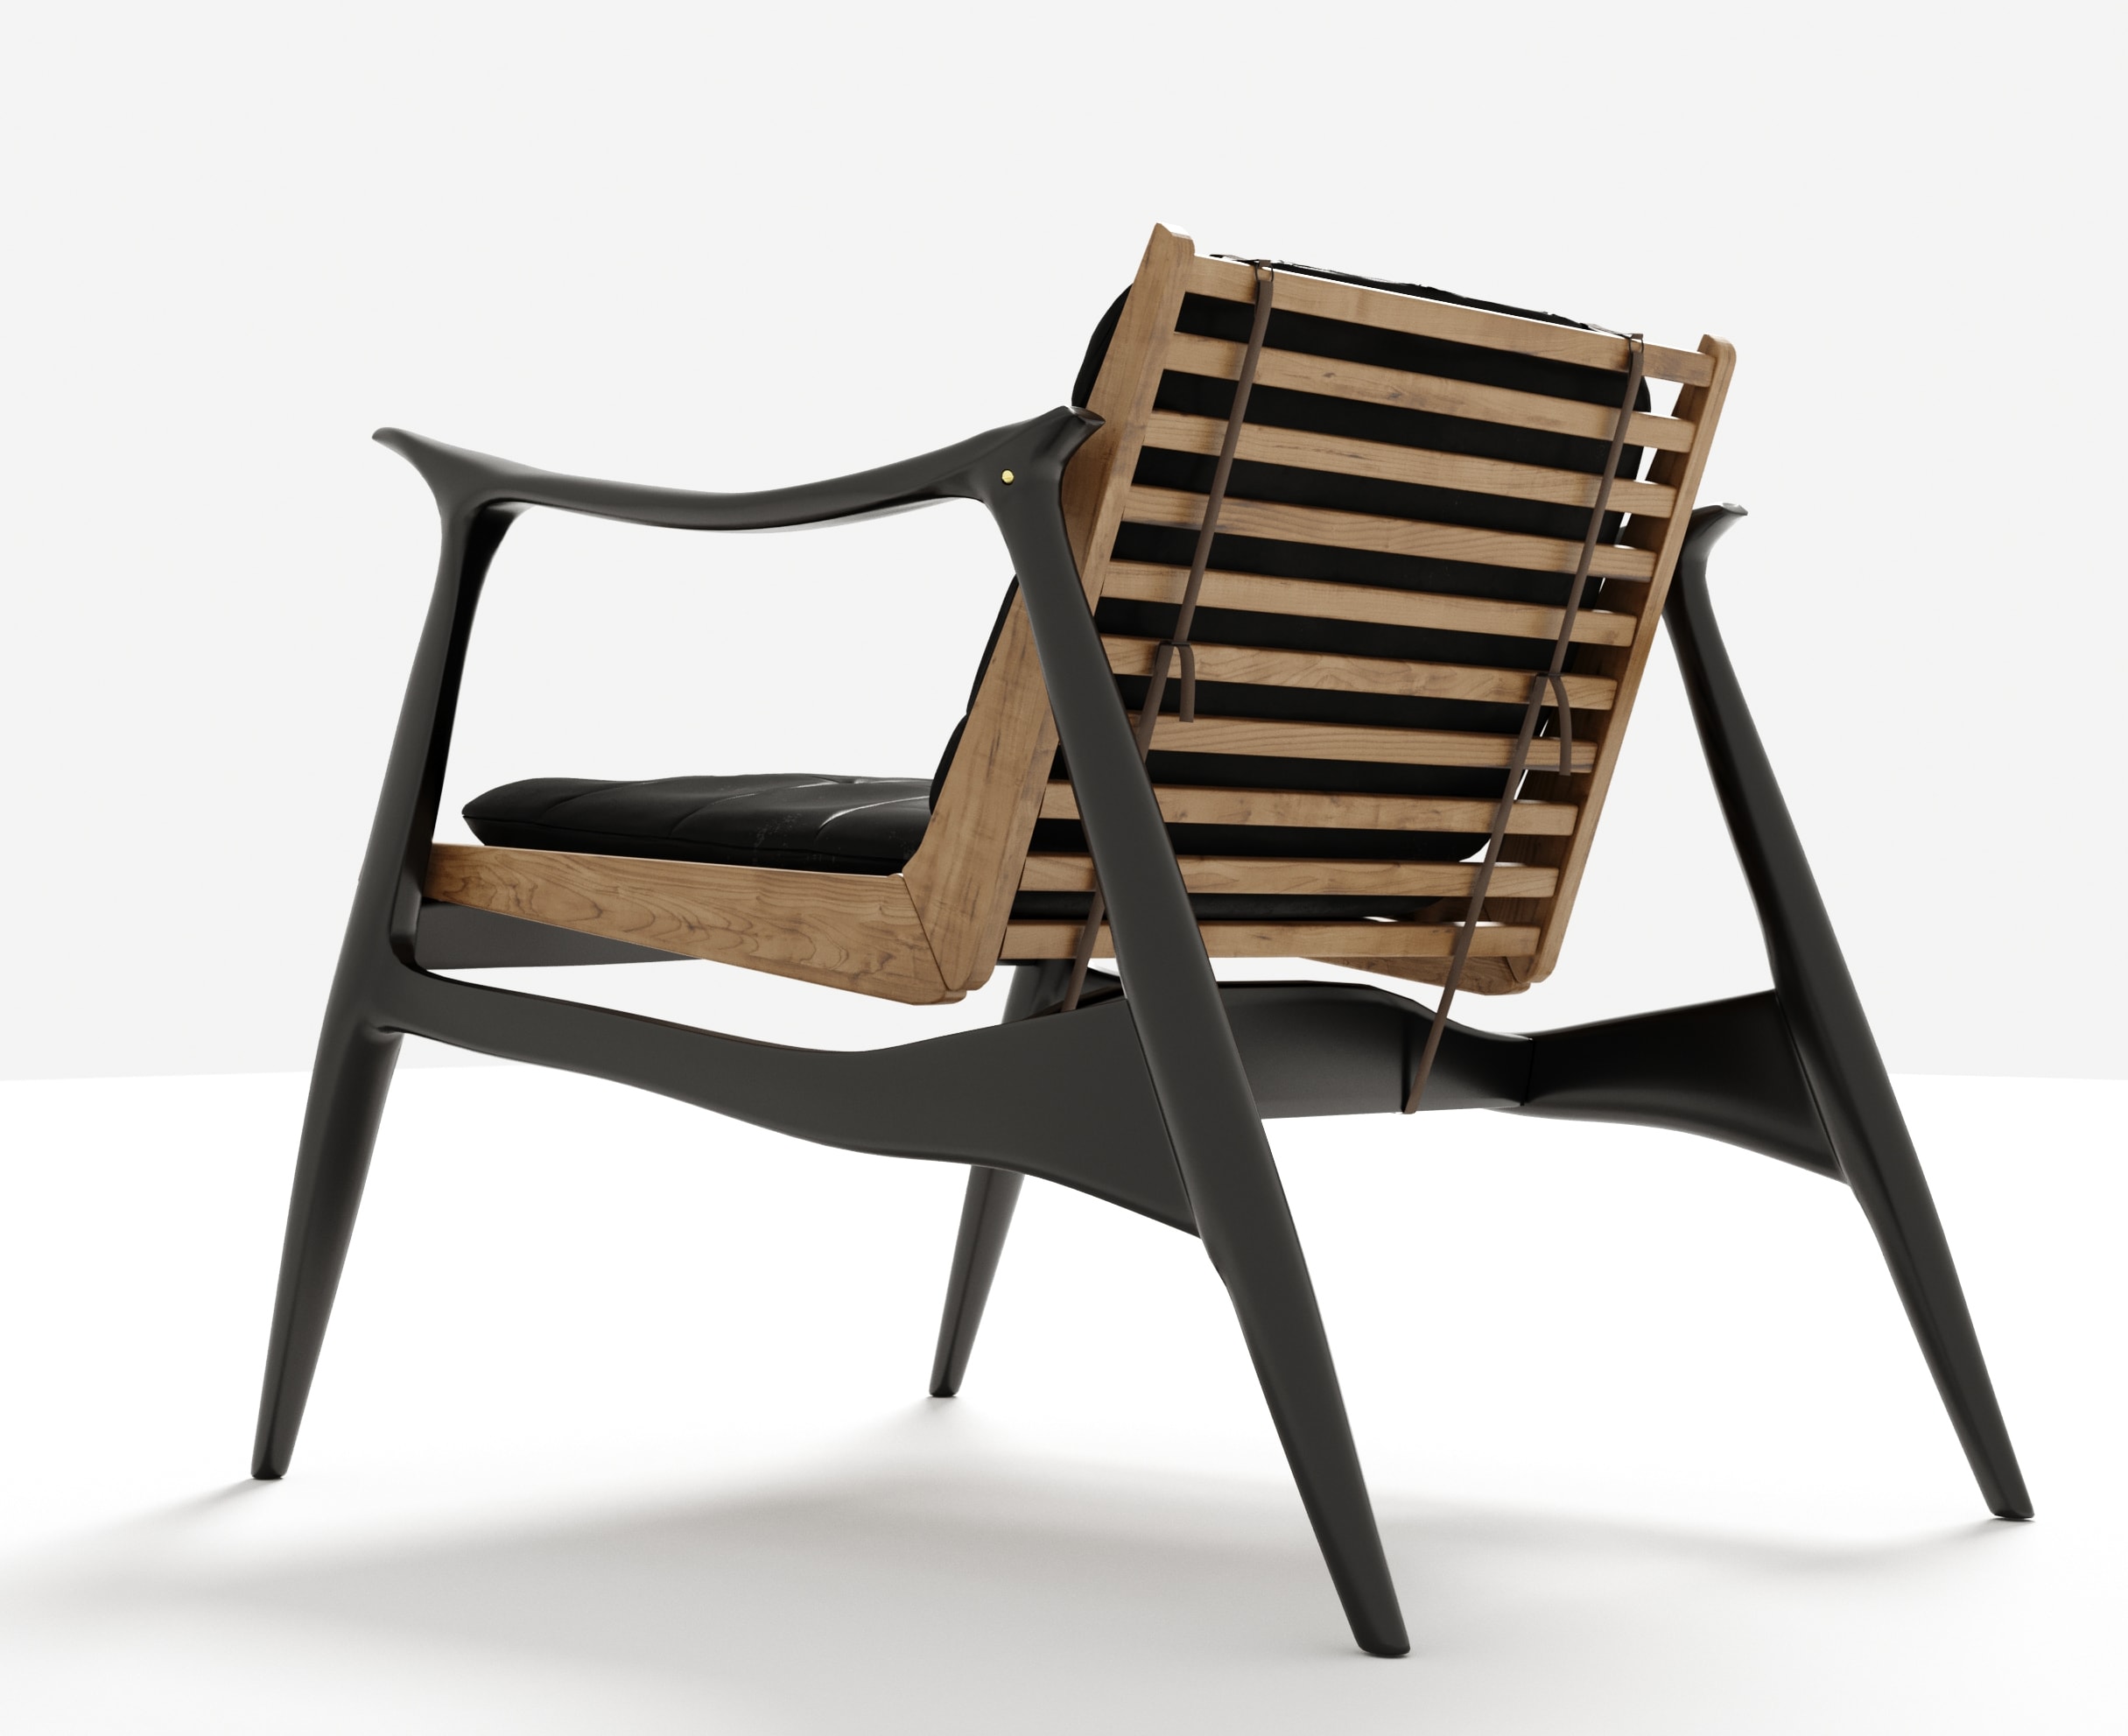 //www.vpva.pt/wp-content/uploads/2018/02/vpva.pt-3d-render-archviz-architecture-project-Atra-Lounge-Chair-Model-3d-4.jpg